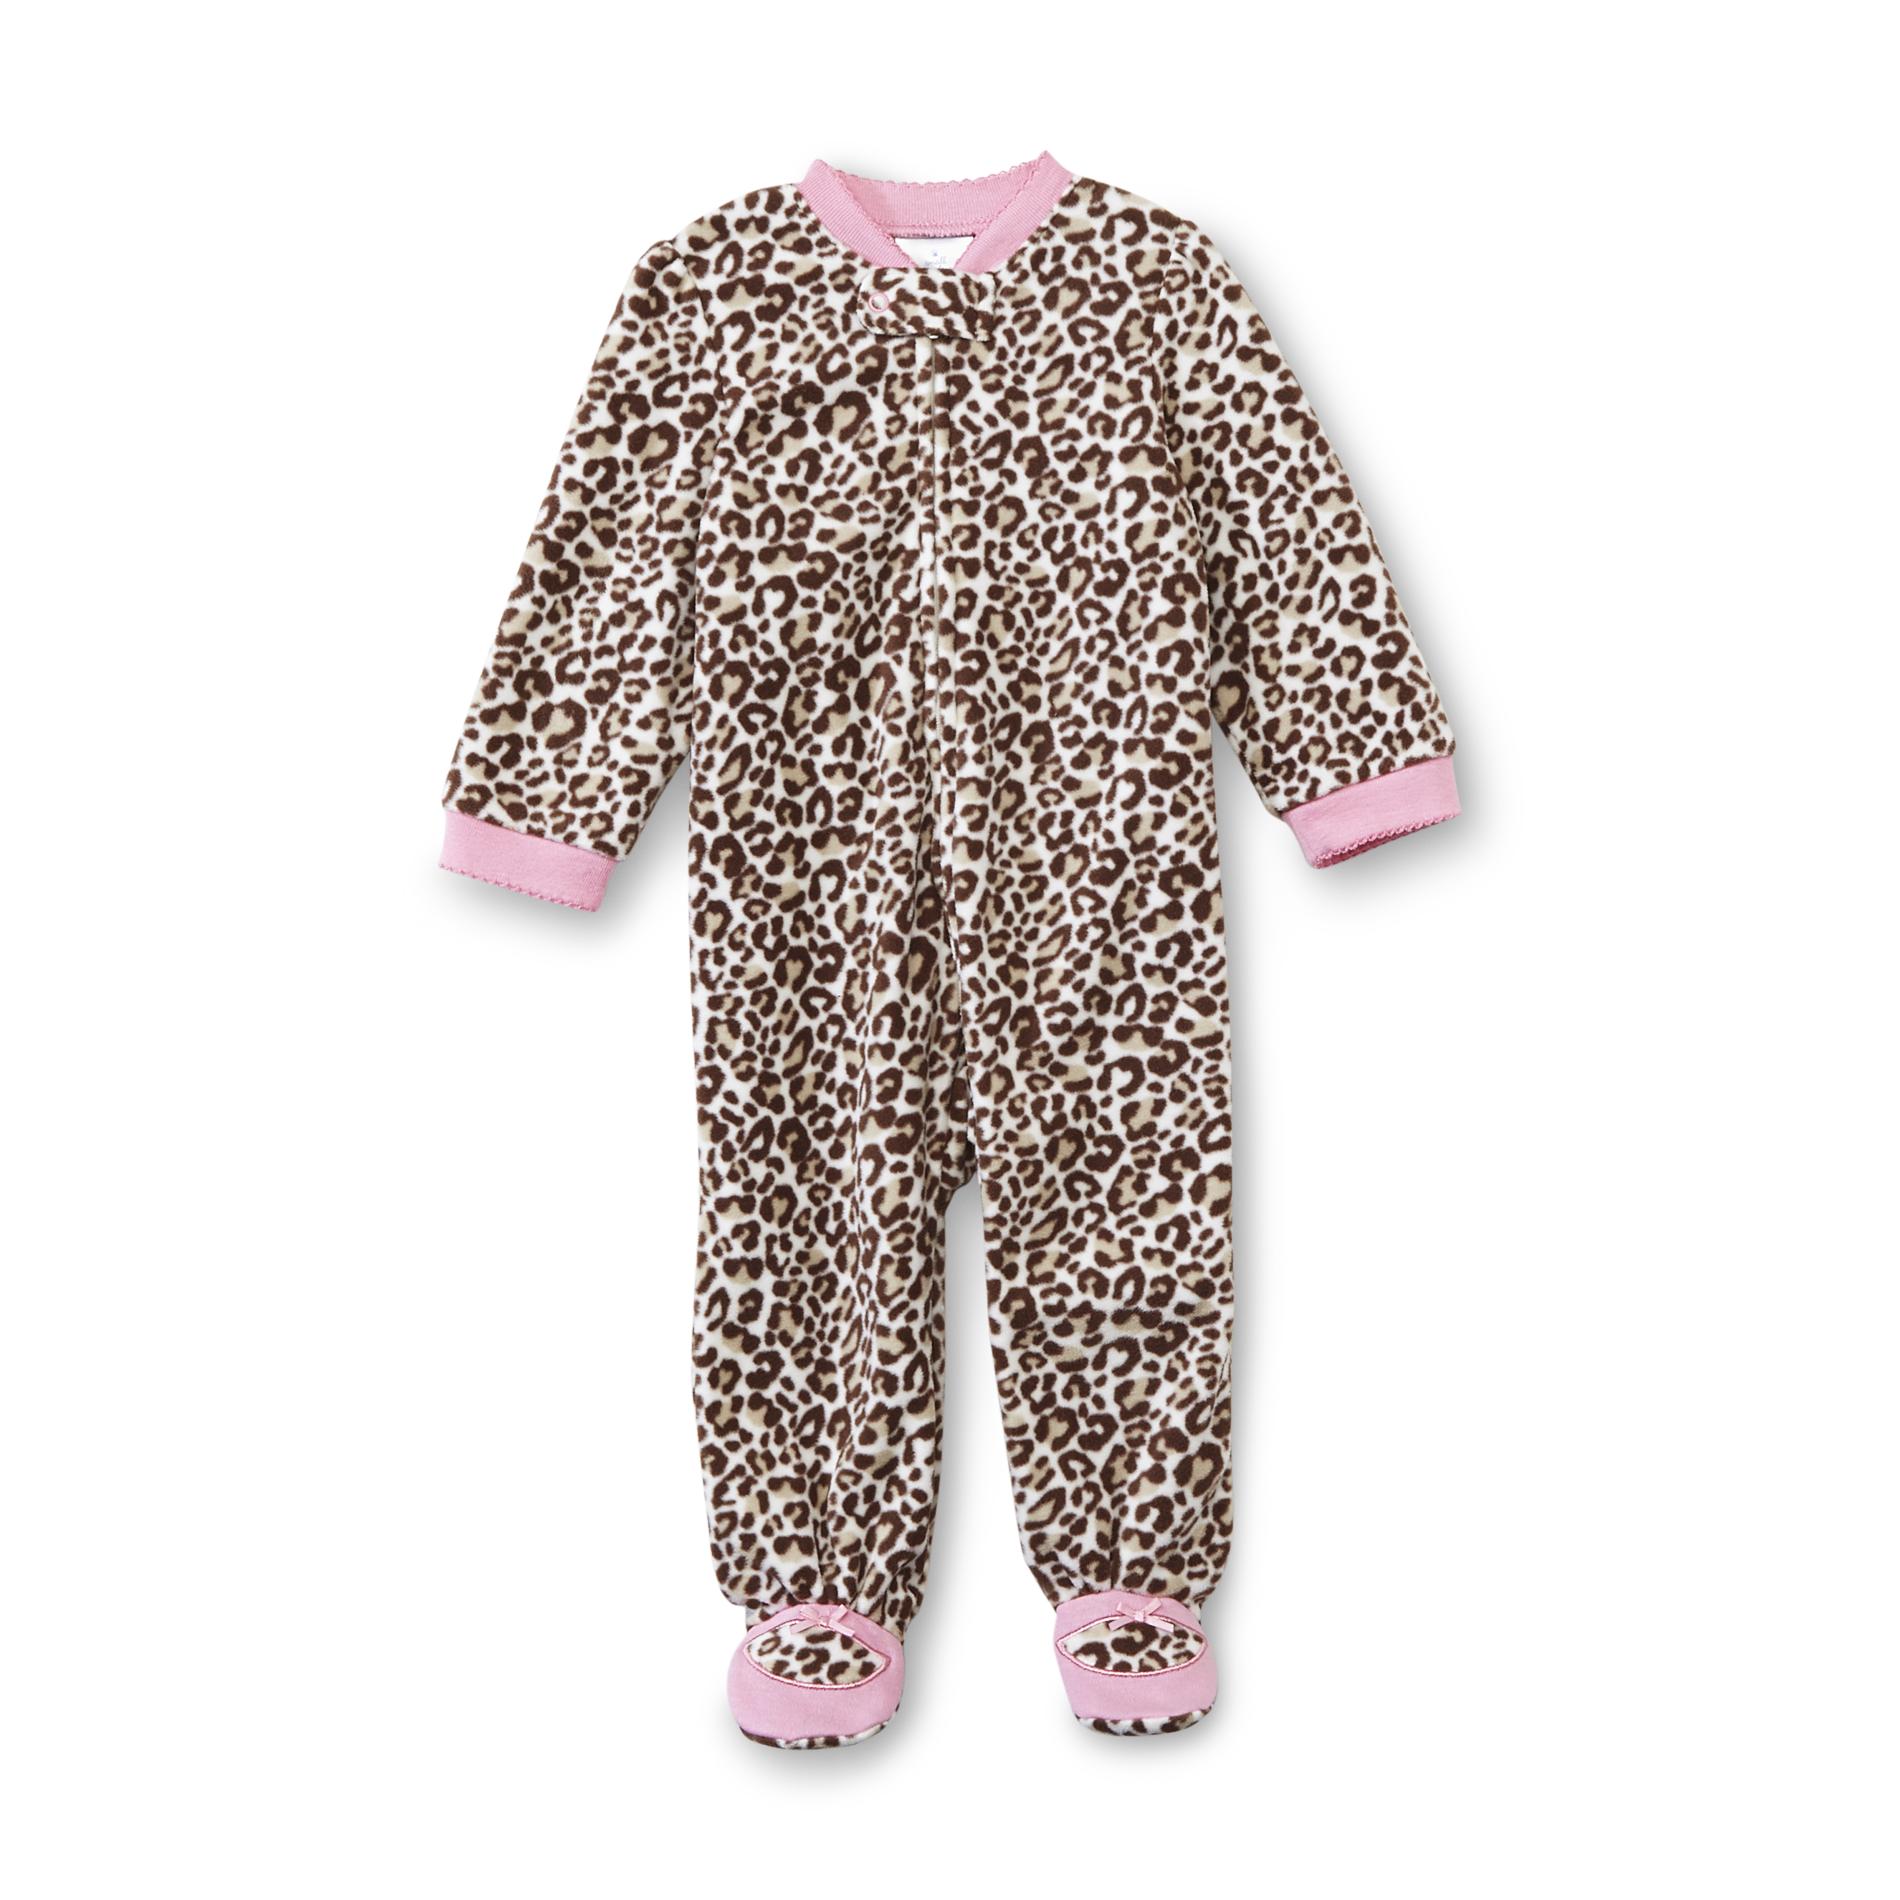 Small Wonders Newborn Girl's Footed Pajamas - Leopard Print